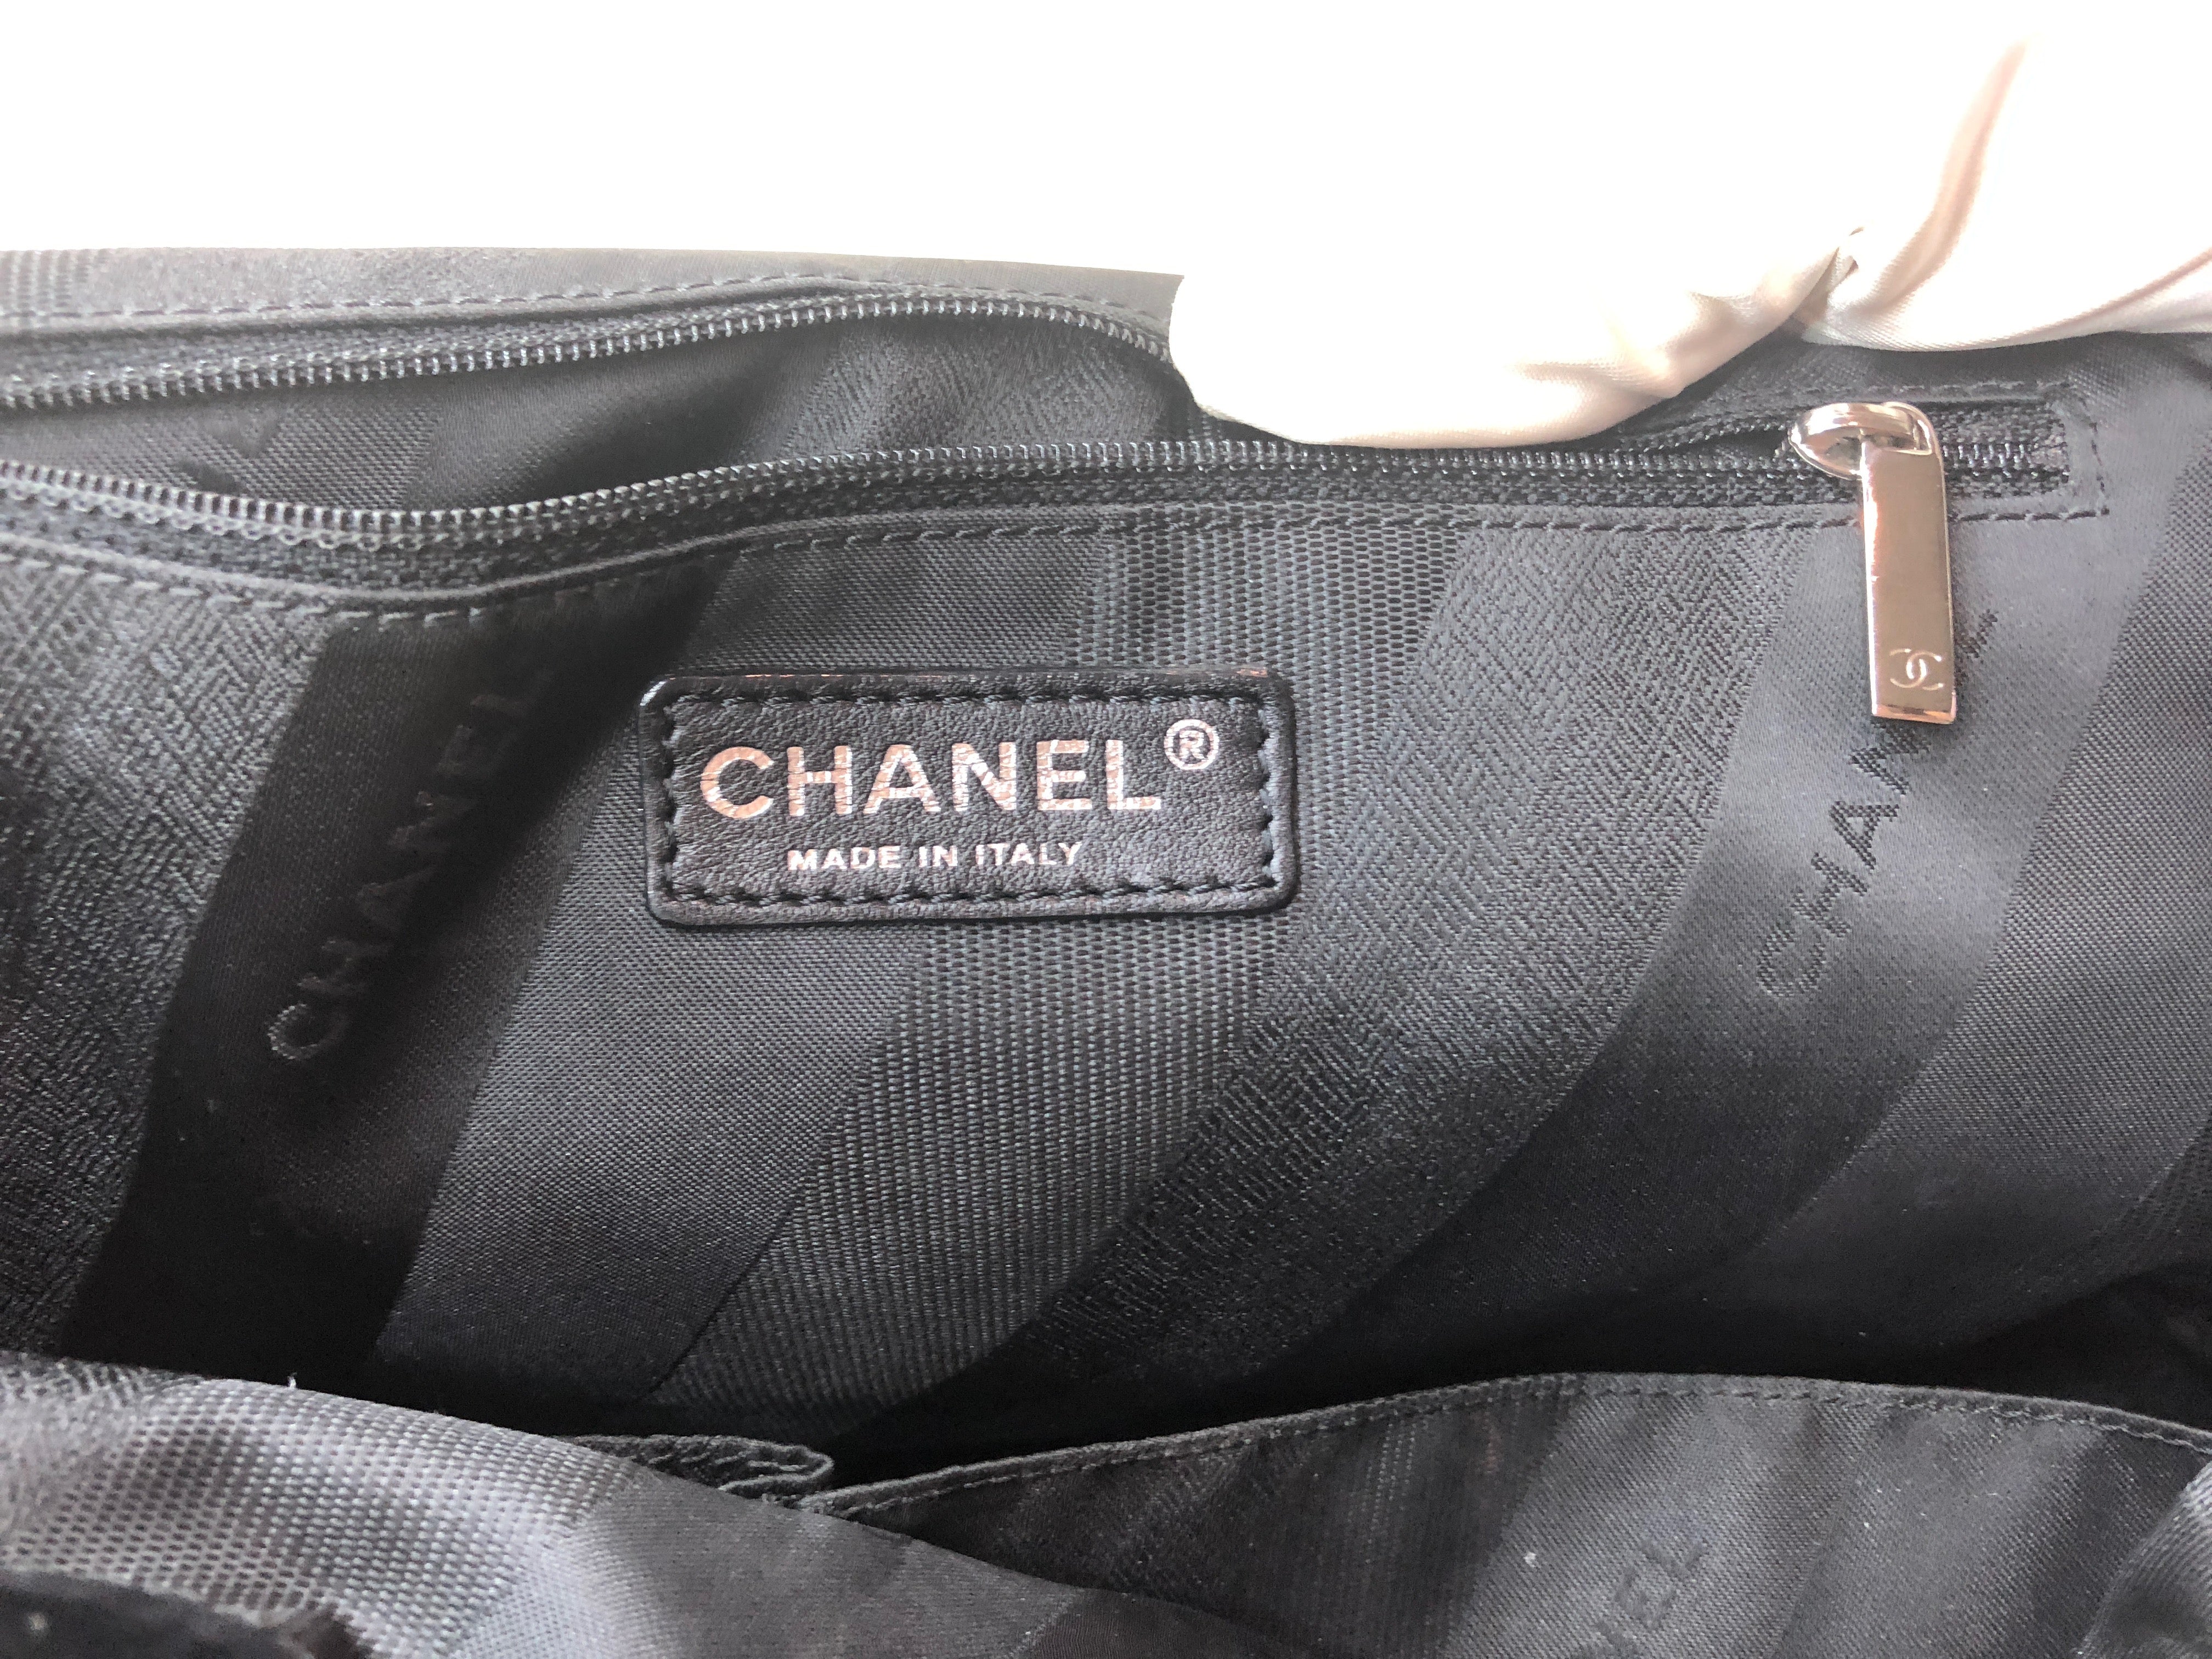 Chanel Portobello Handbag in Grey/ Black leather